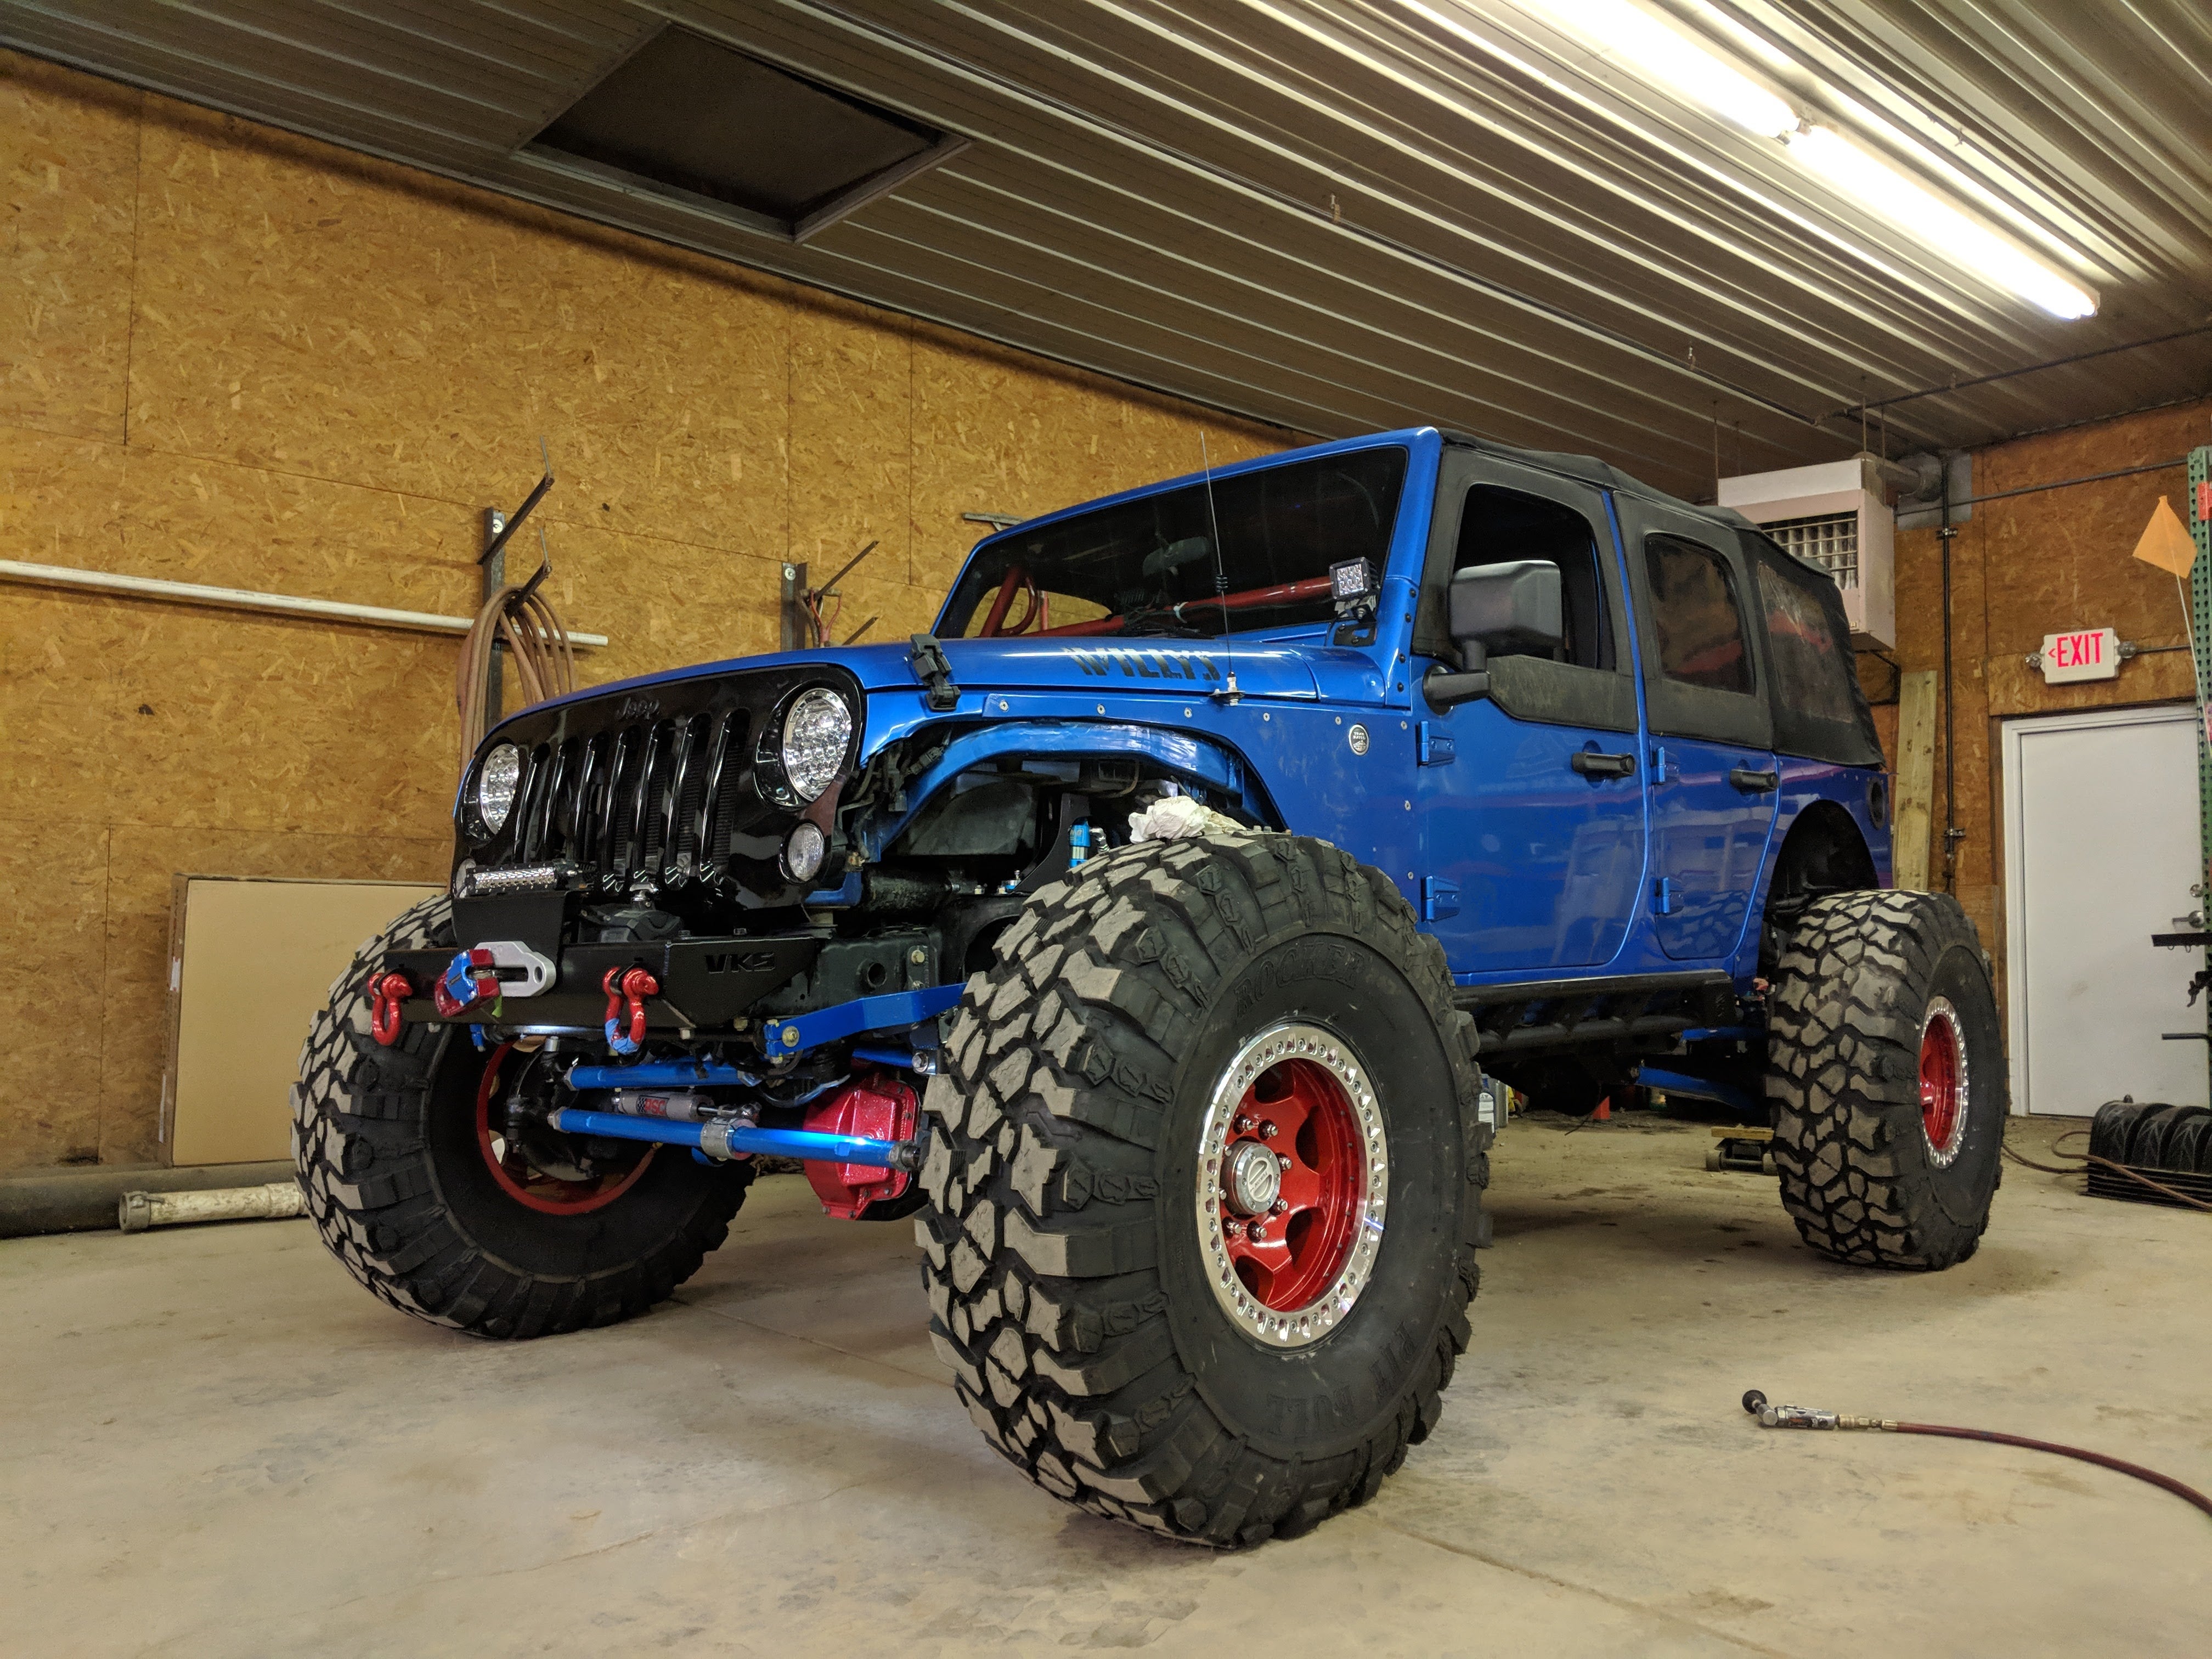 Illinois - 2016 Jeep Wrangler -13k miles (2k on build) - one tons on 42s -  45k obo | Jeep Wrangler Forum